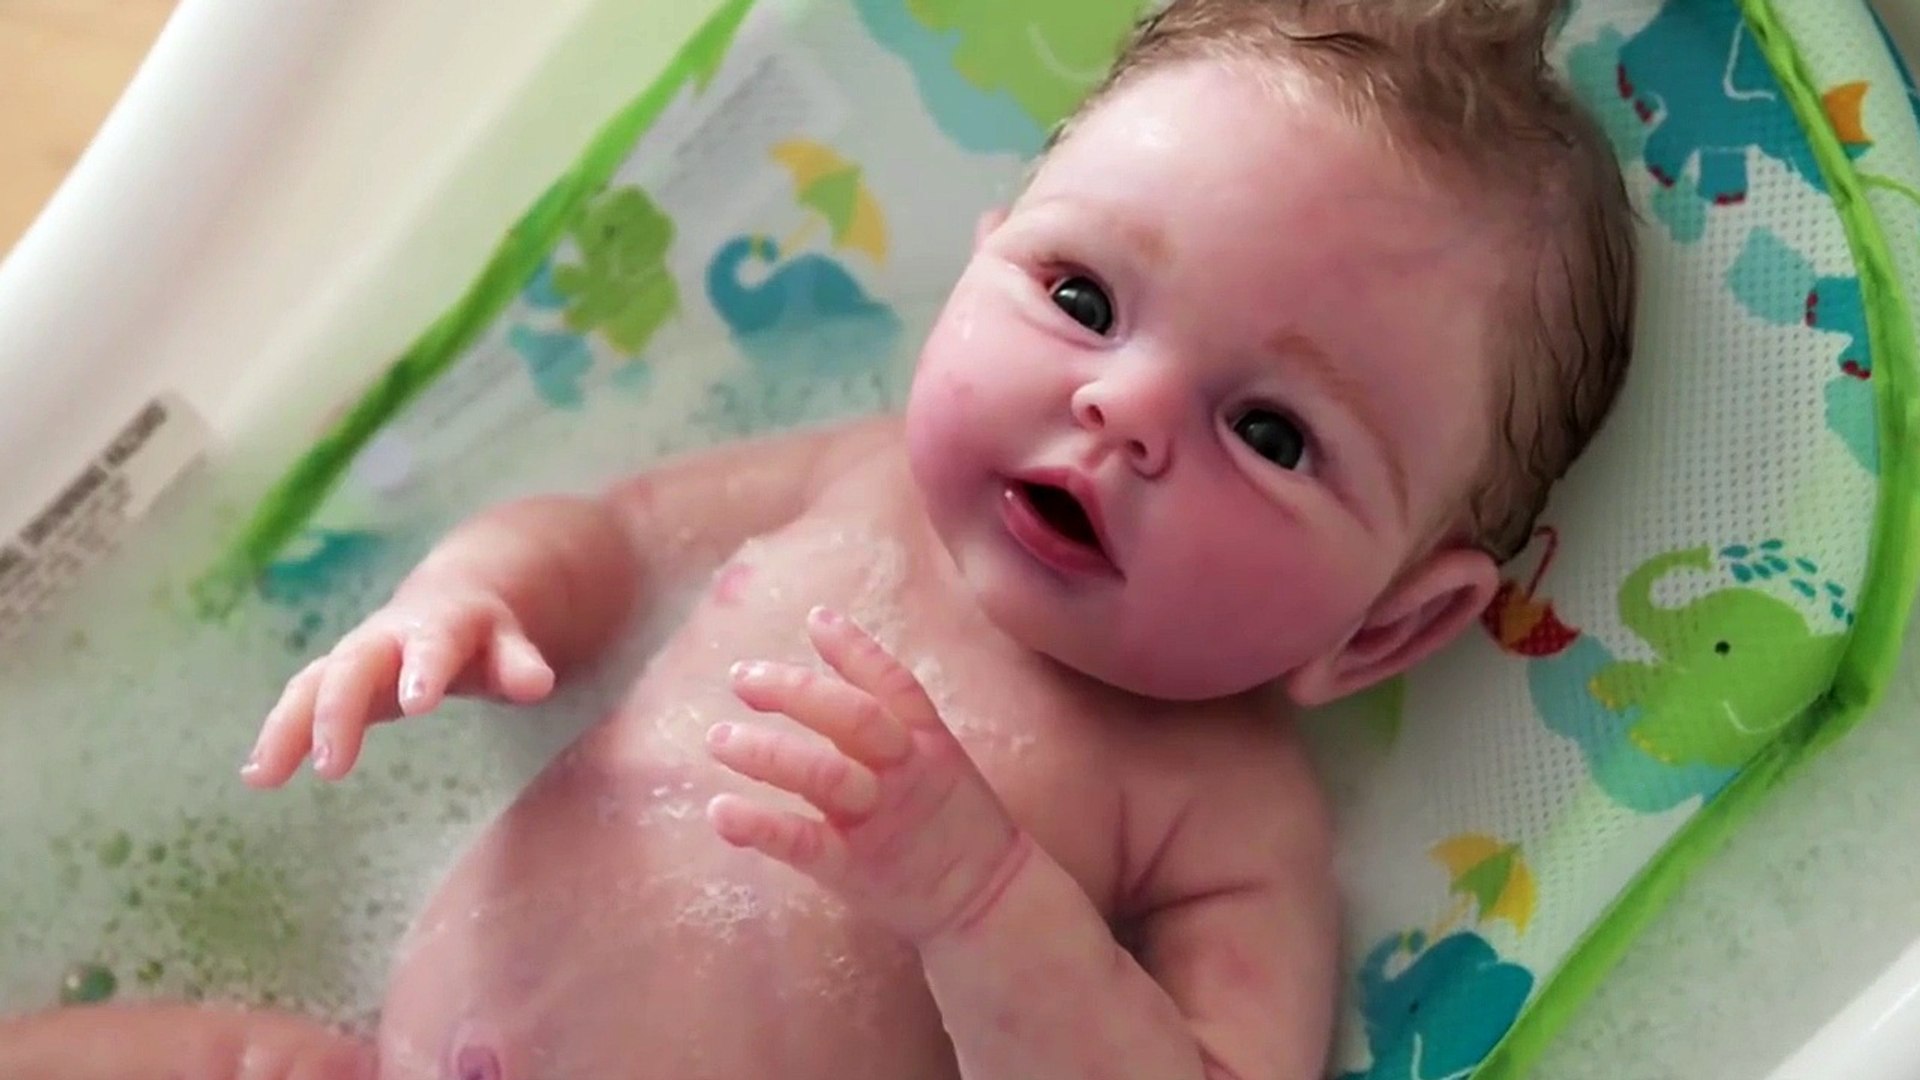 Boneca Bebê Reborn Silicone Sólido Realista Pode Dar Banho